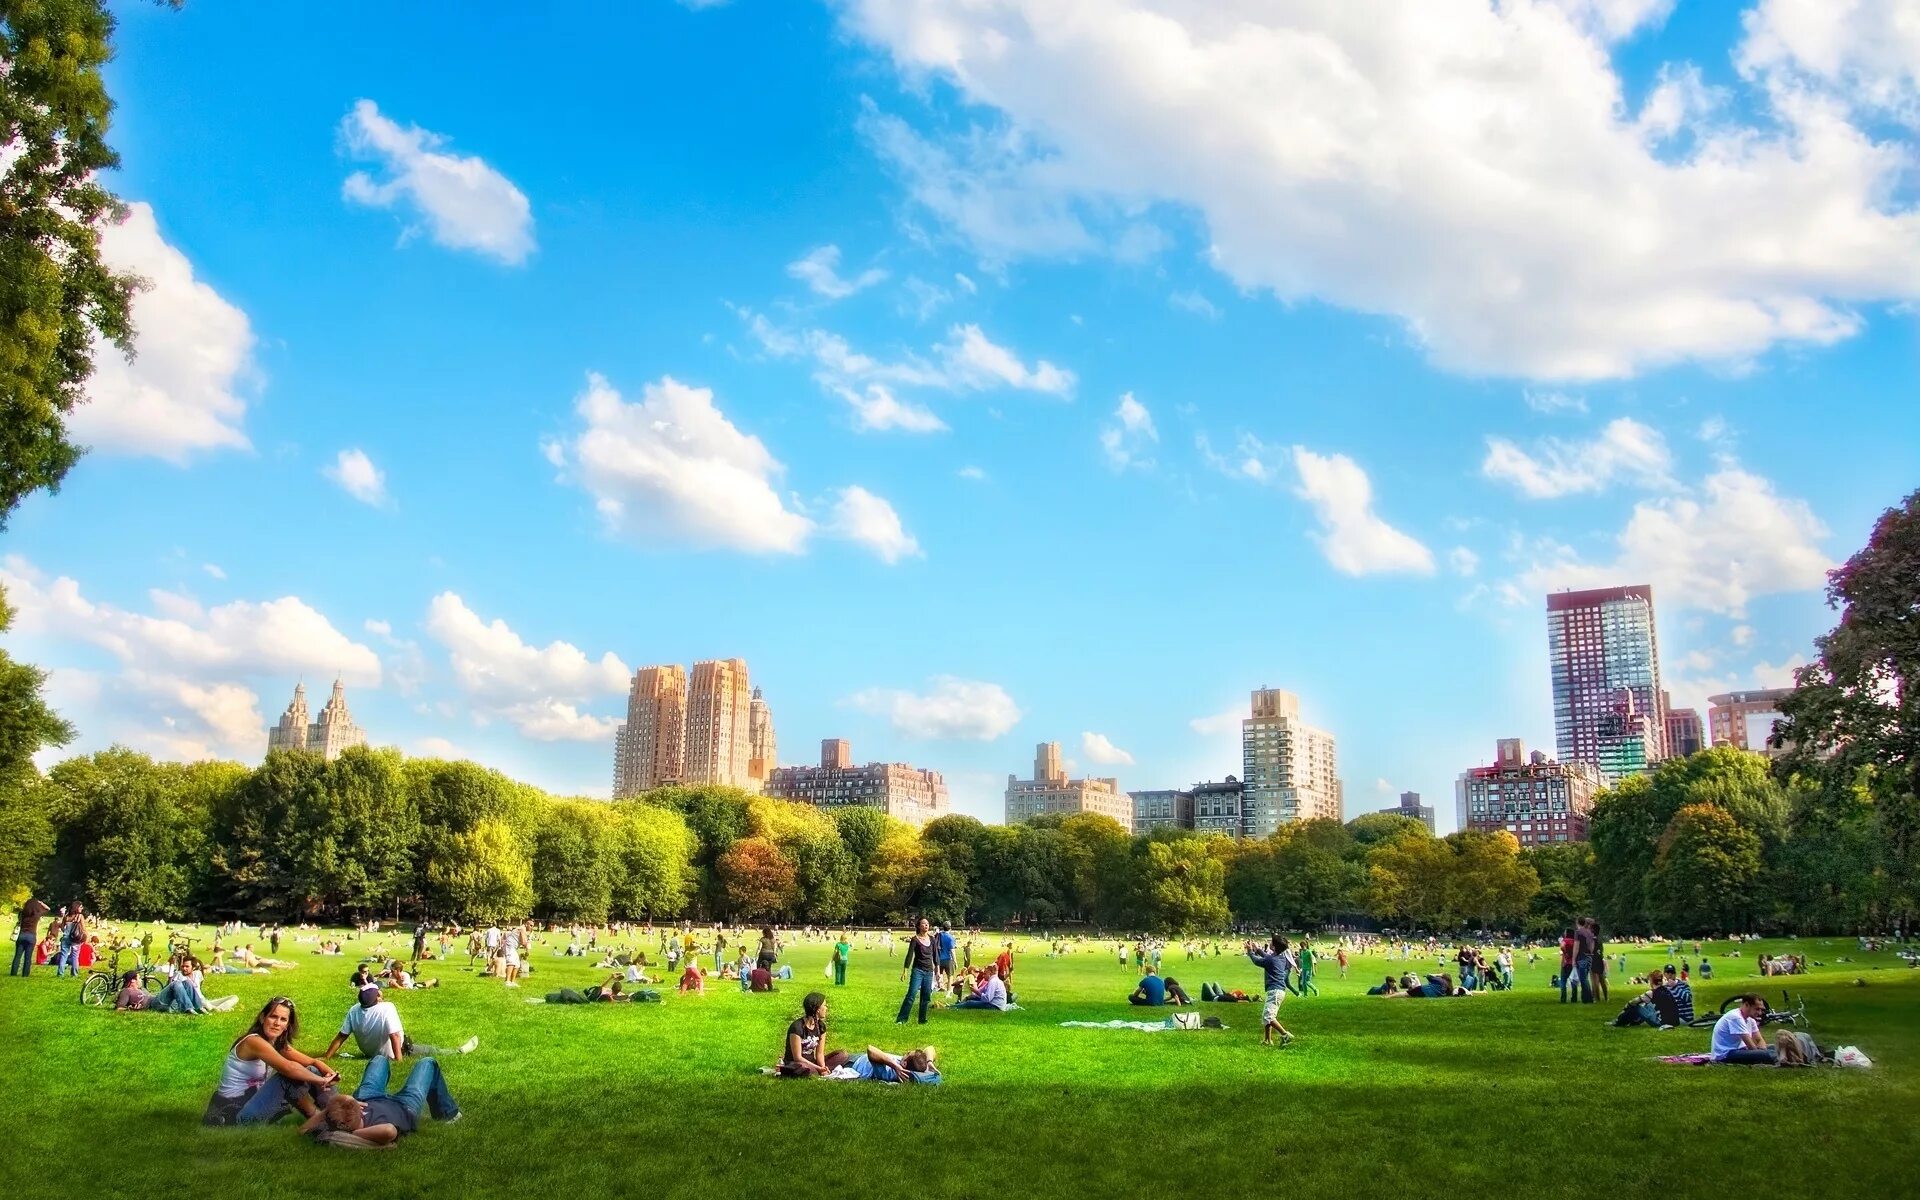 Park in. Центральный парк Нью-Йорка газон. Центральный парк Нью-Йорк пикник. Большая лужайка в Центральном парке в Нью-Йорке. Централ парк Лондон.